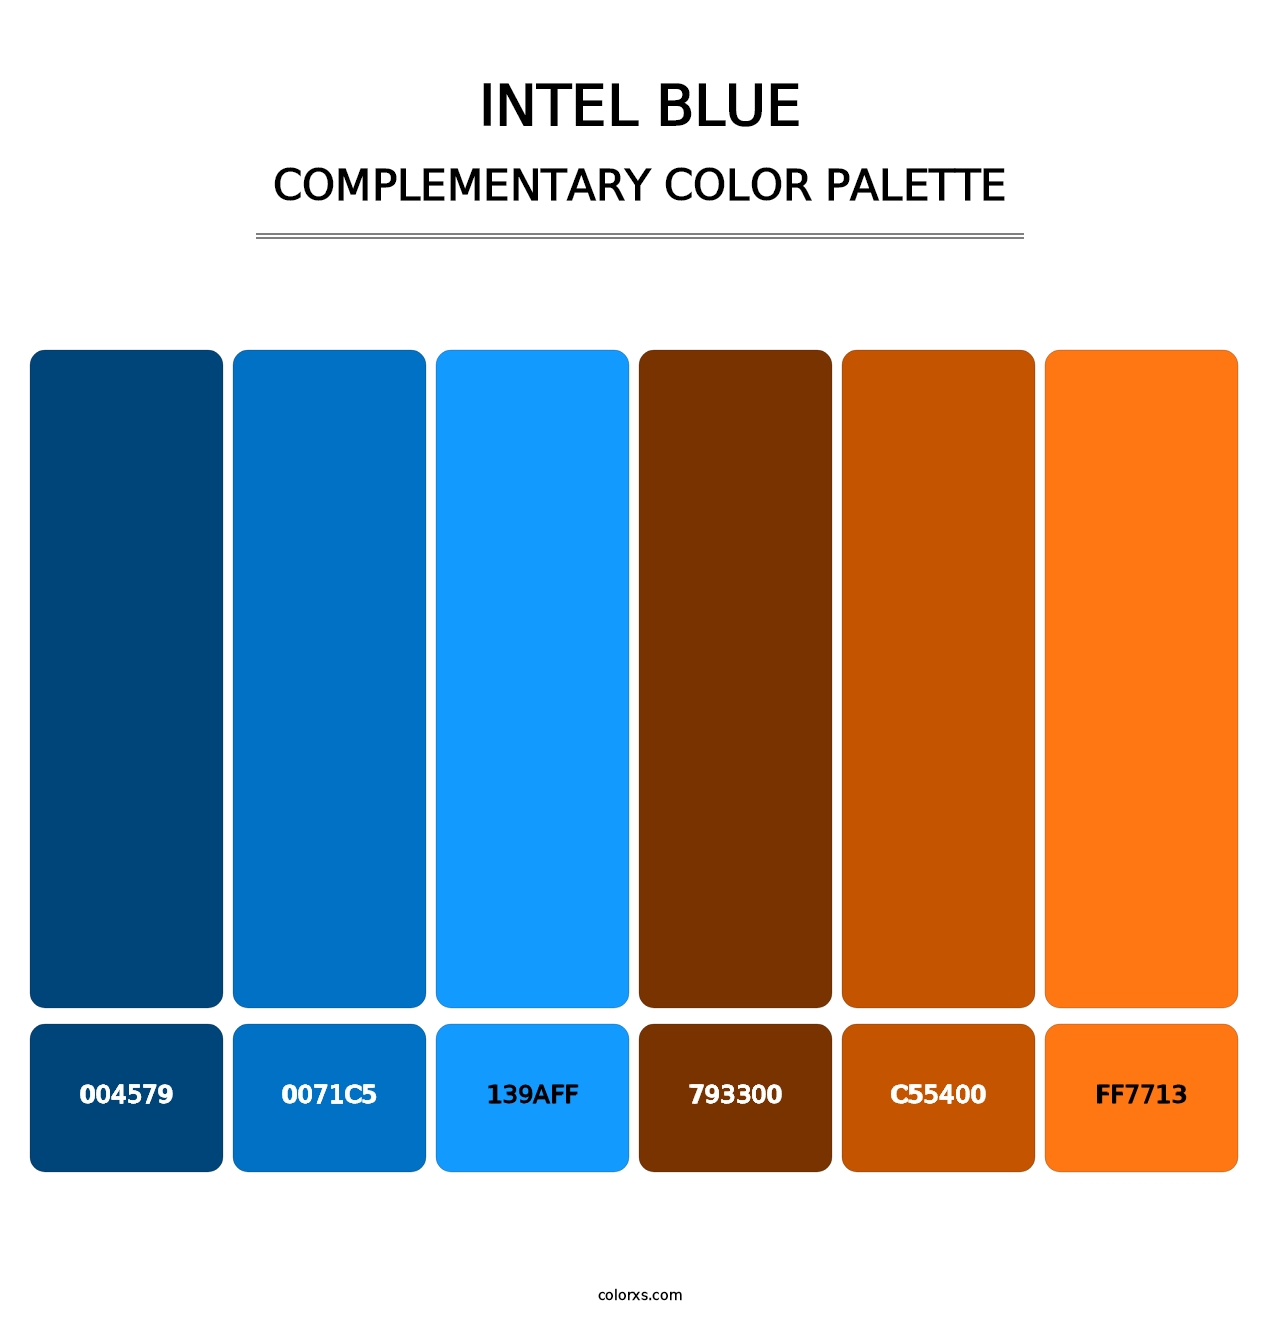 Intel Blue - Complementary Color Palette